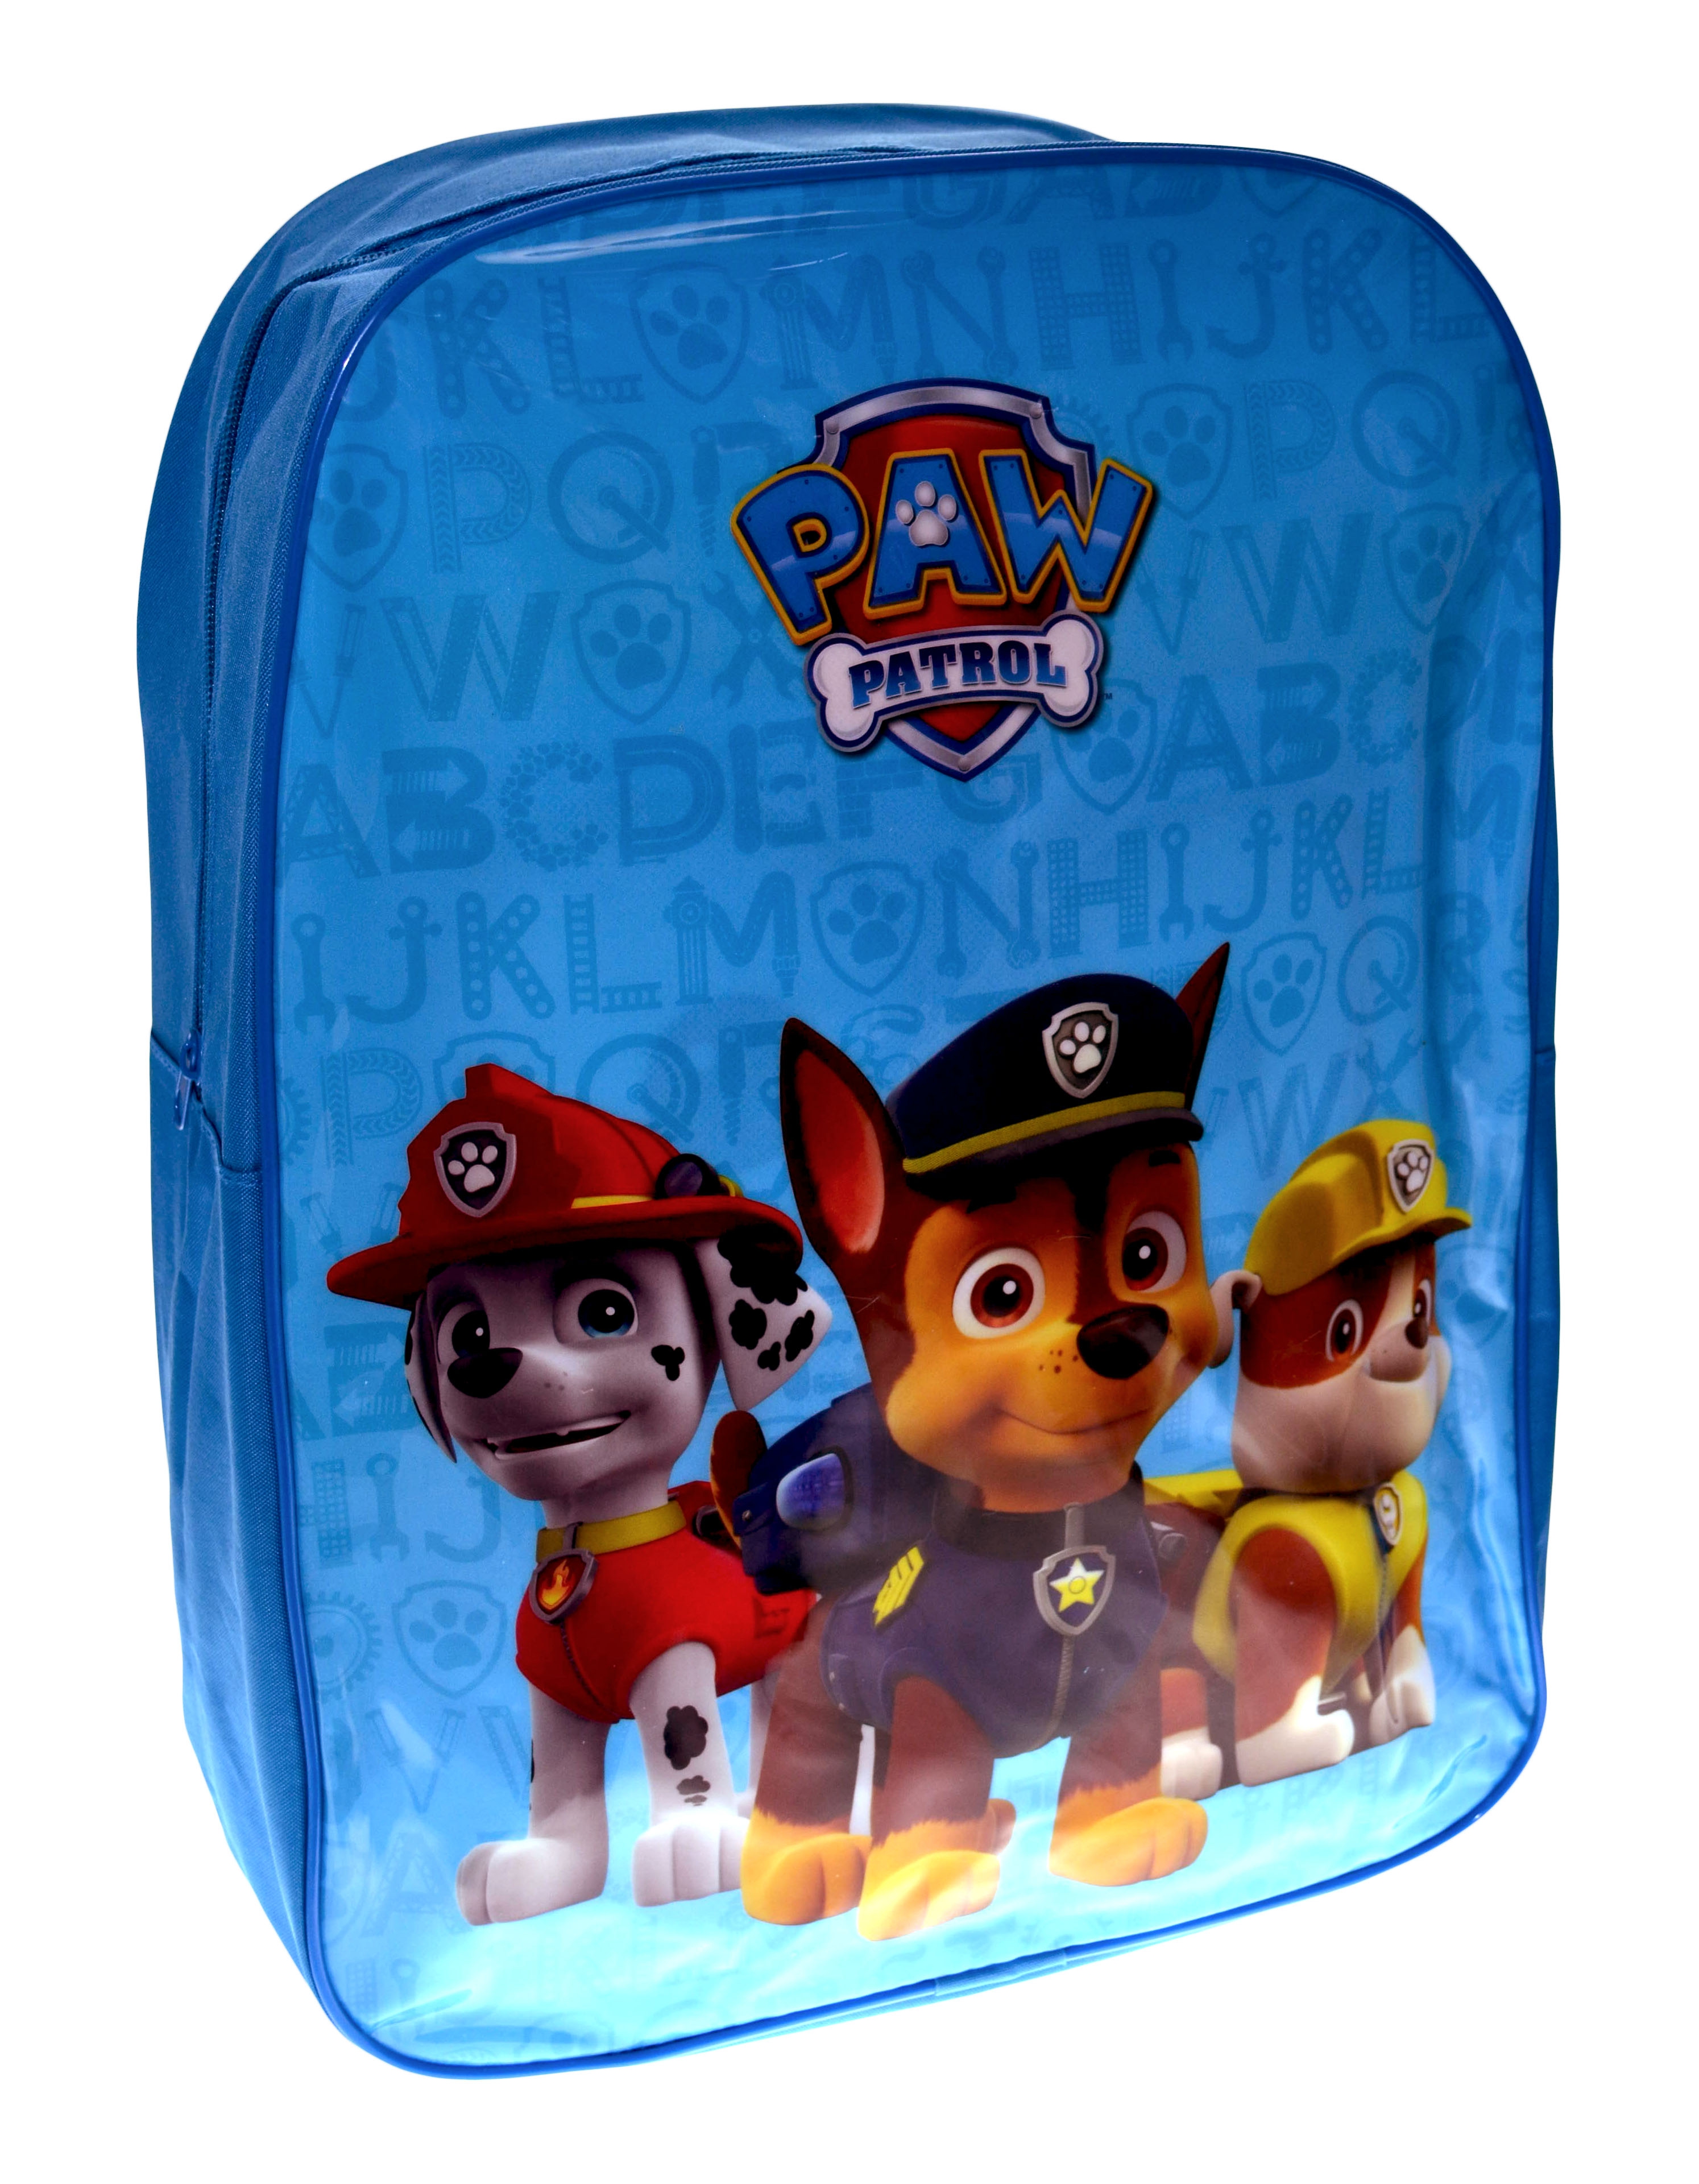 Paw Patrol 'Rescue Squad' Boys Nursery Mini School Bag Rucksack Backpack